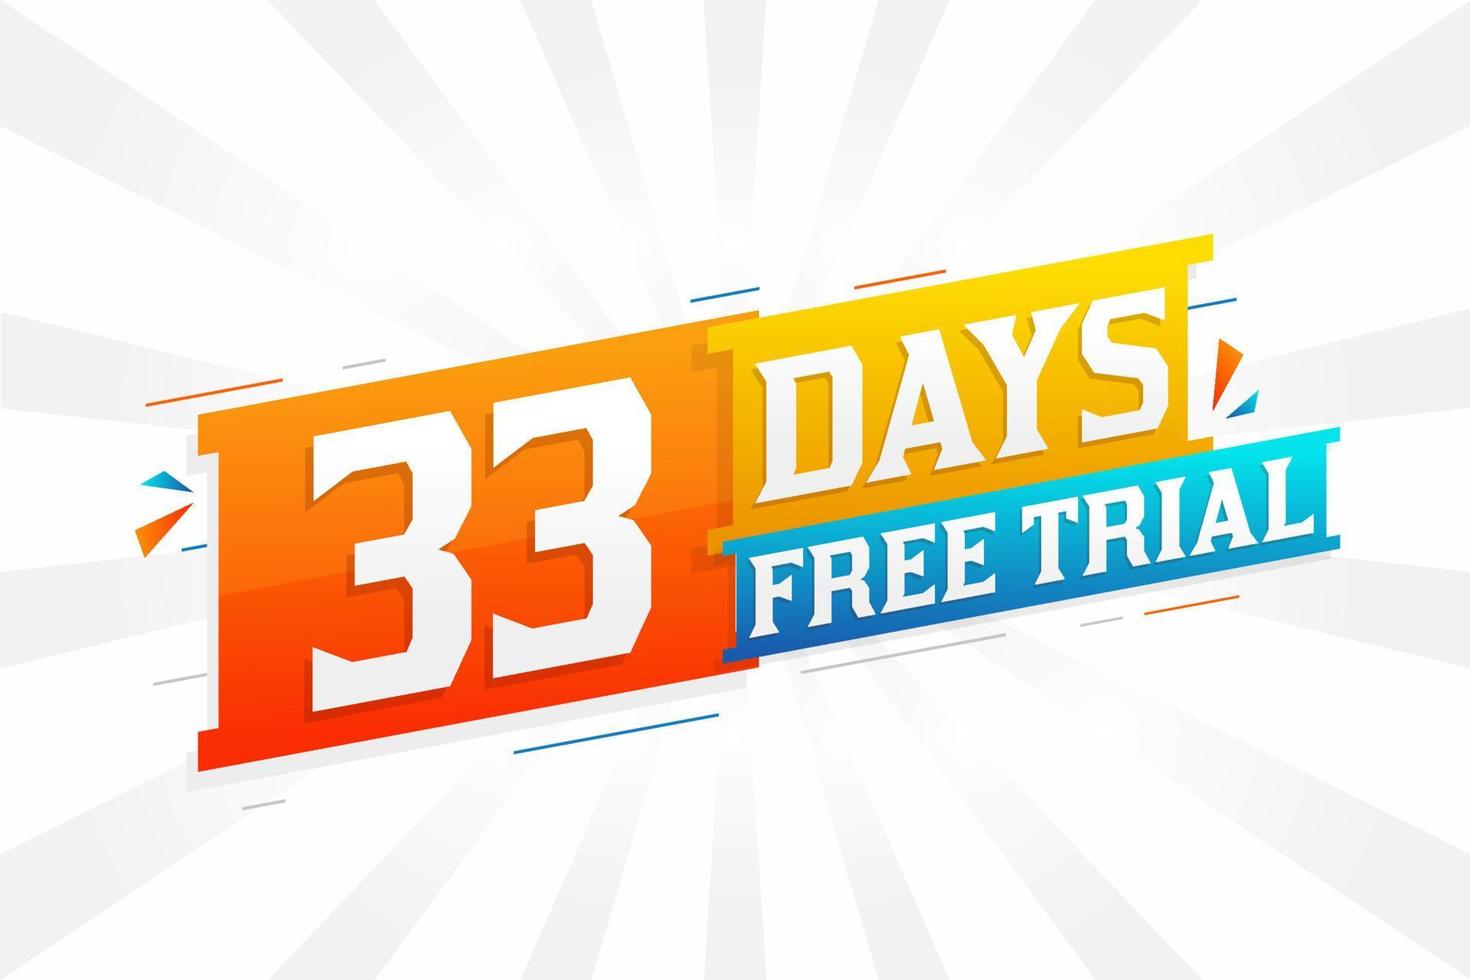 Vector de stock de texto en negrita promocional de prueba gratuita de 33 días